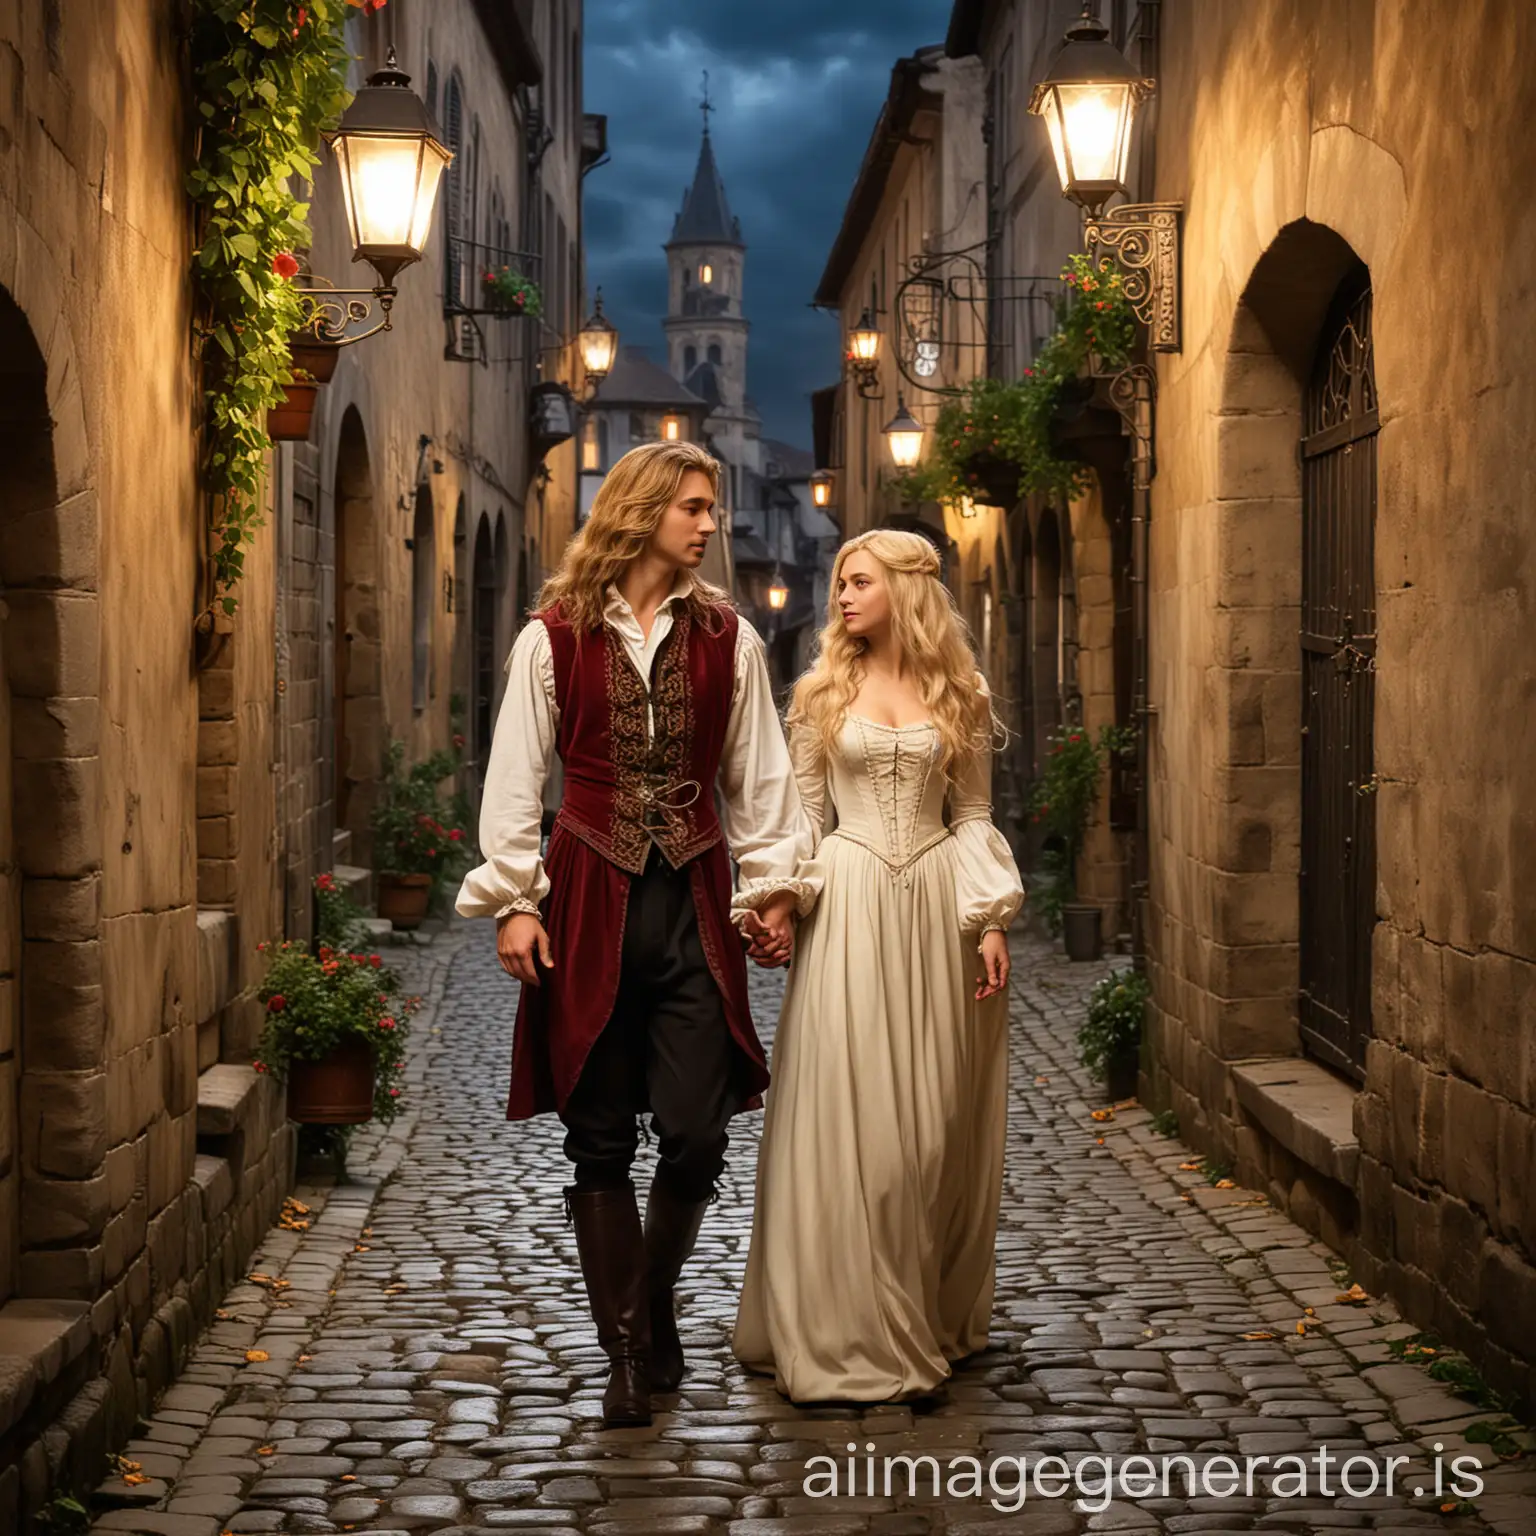 Renaissance-Romantic-Couple-Strolling-Down-Cobblestone-Village-Alley-with-Lantern